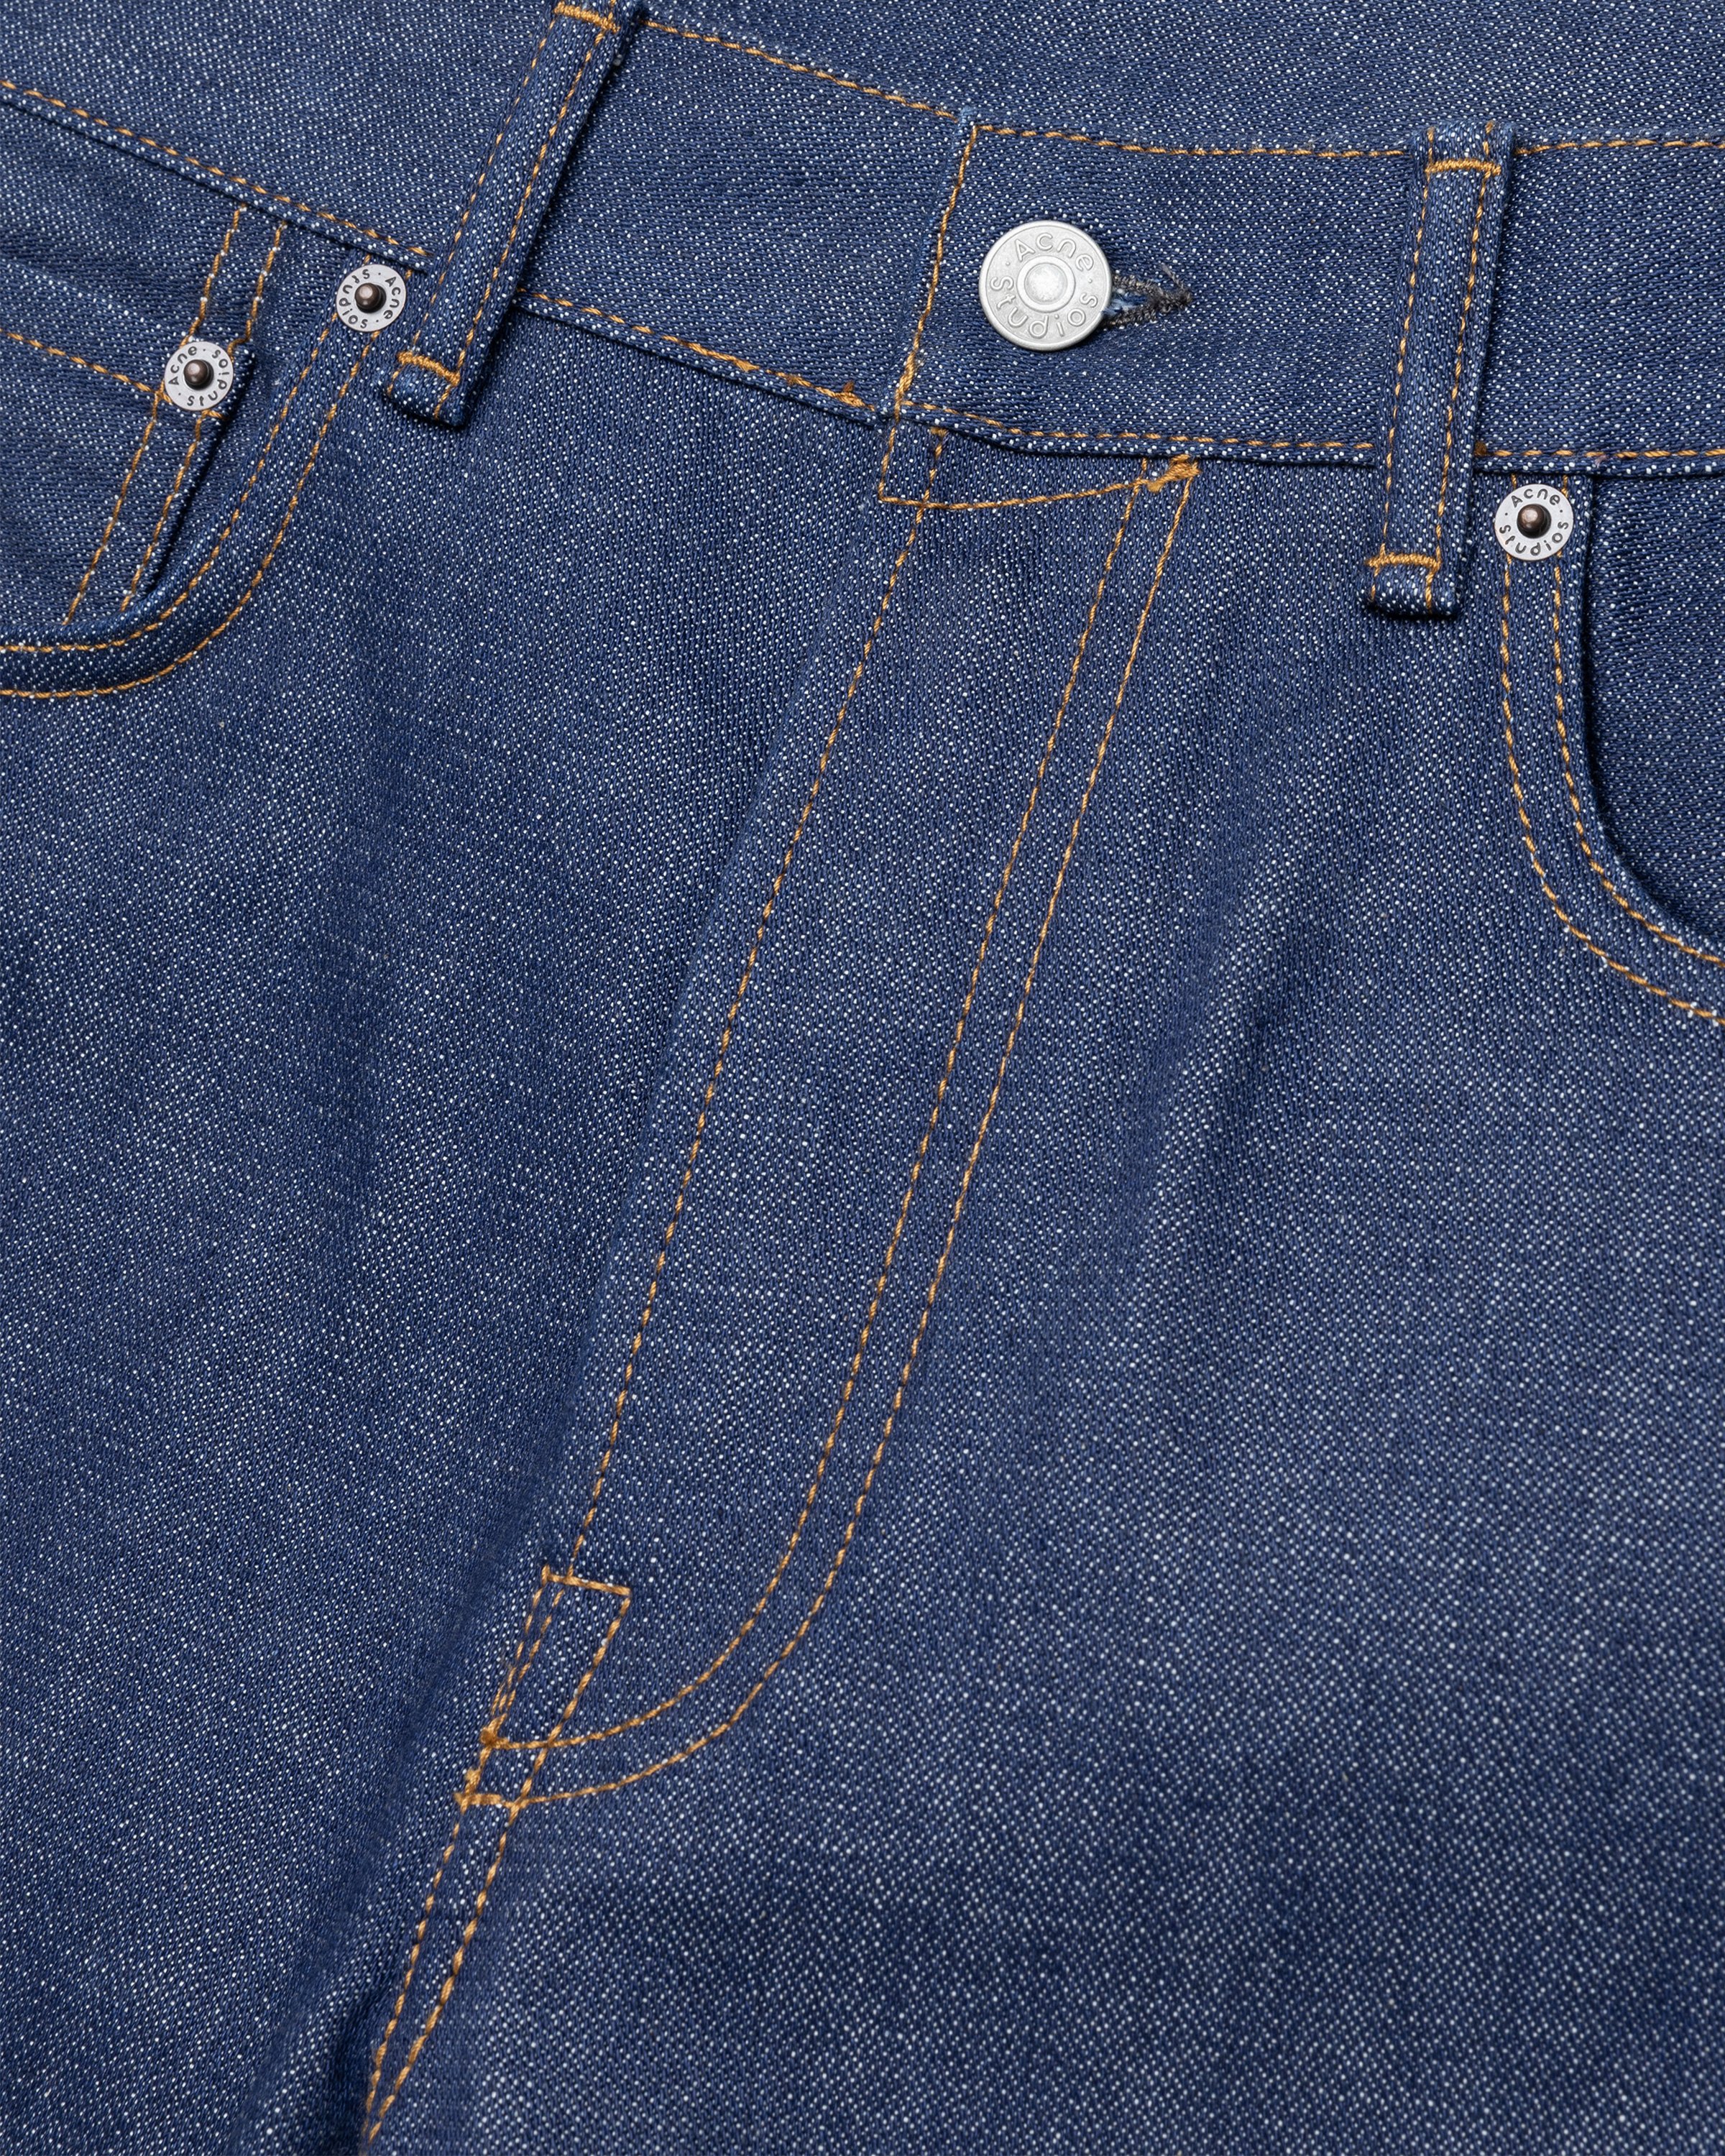 Acne Studios - Regular Fit Jeans 1992 Indigo Blue - Clothing - Blue - Image 5